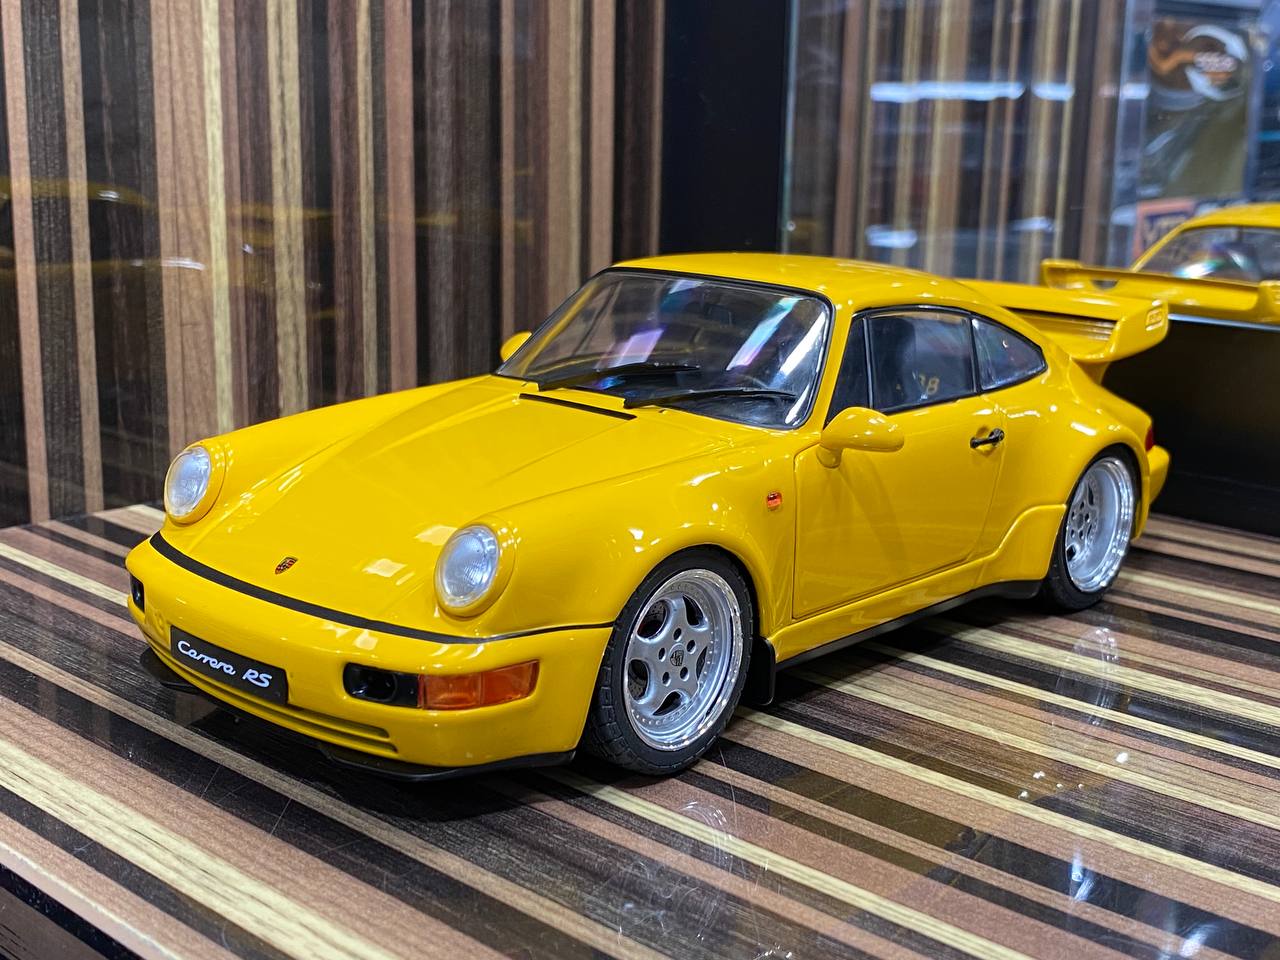 1/18 Diecast Porsche 911 3.8 RS Yellow Solido Miniature Model Car|Sold in Dturman.com Dubai UAE.